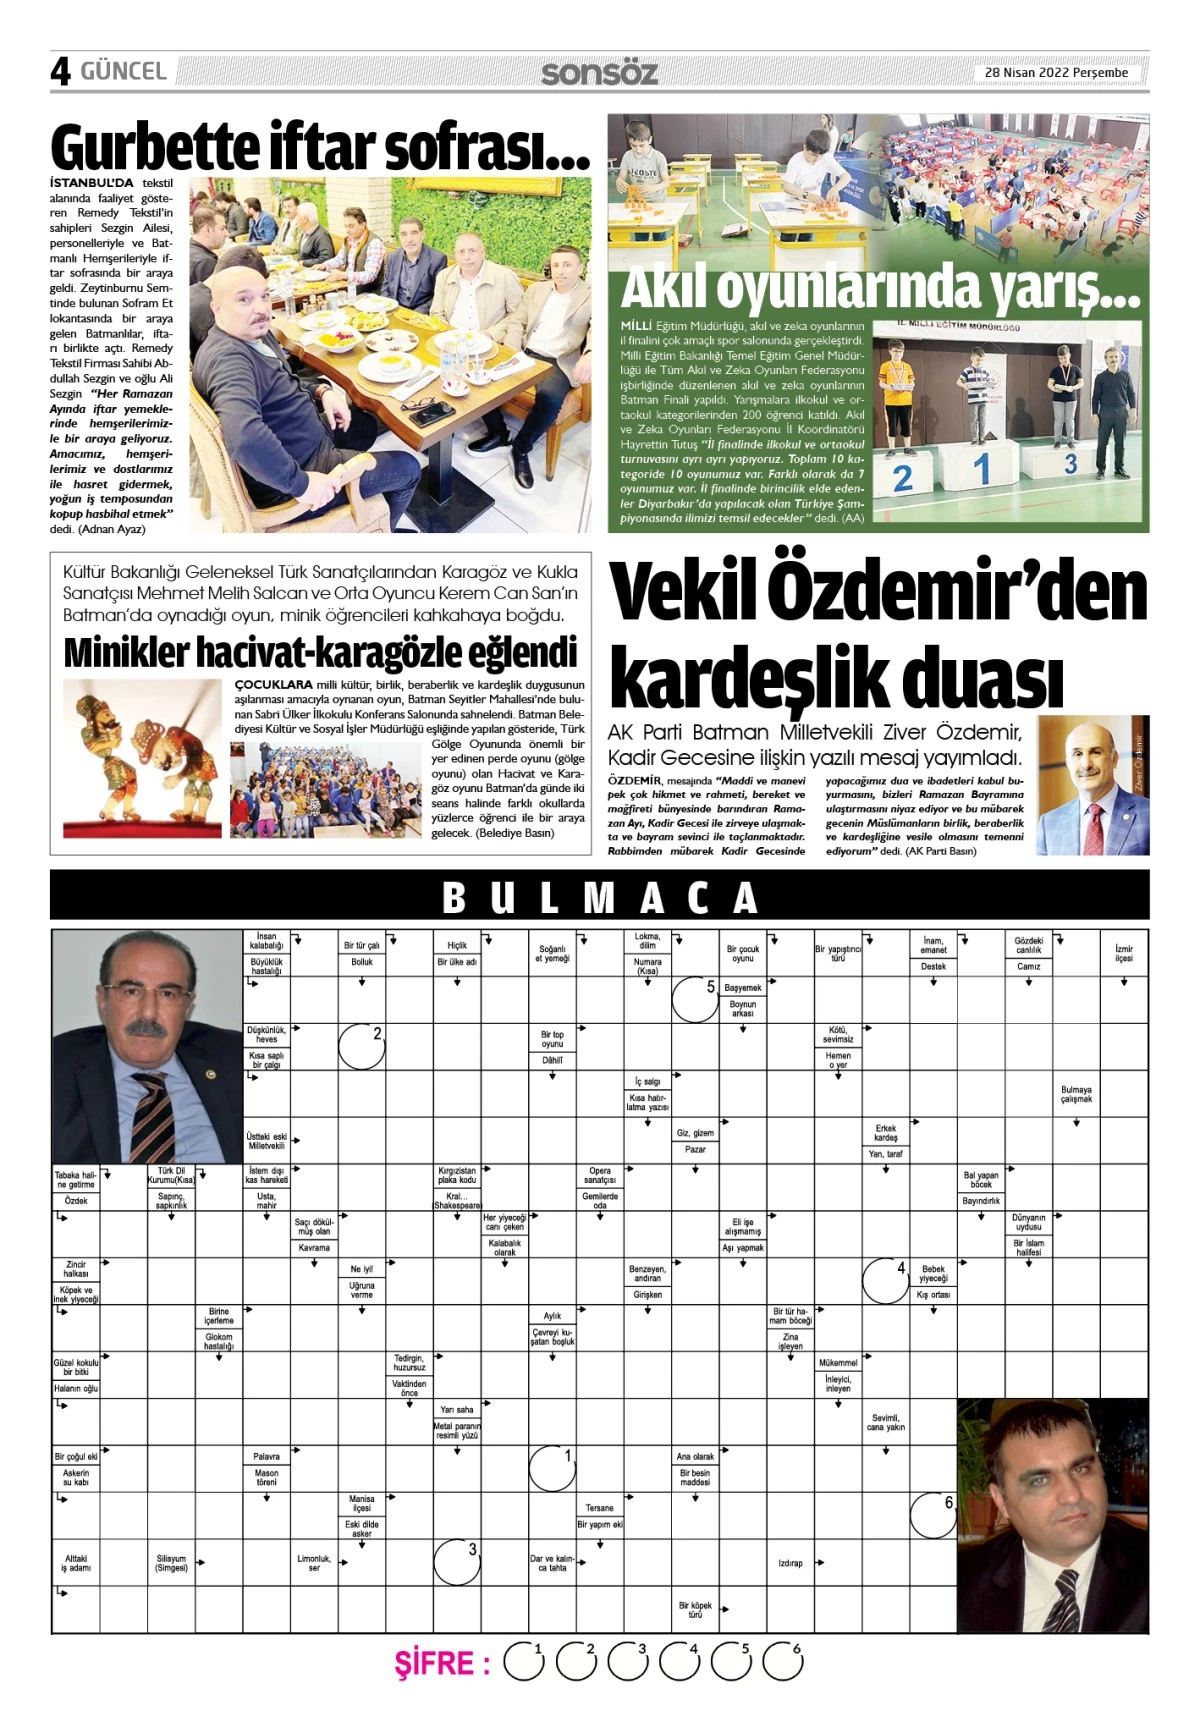 28 Nisan 2022 E-gazete